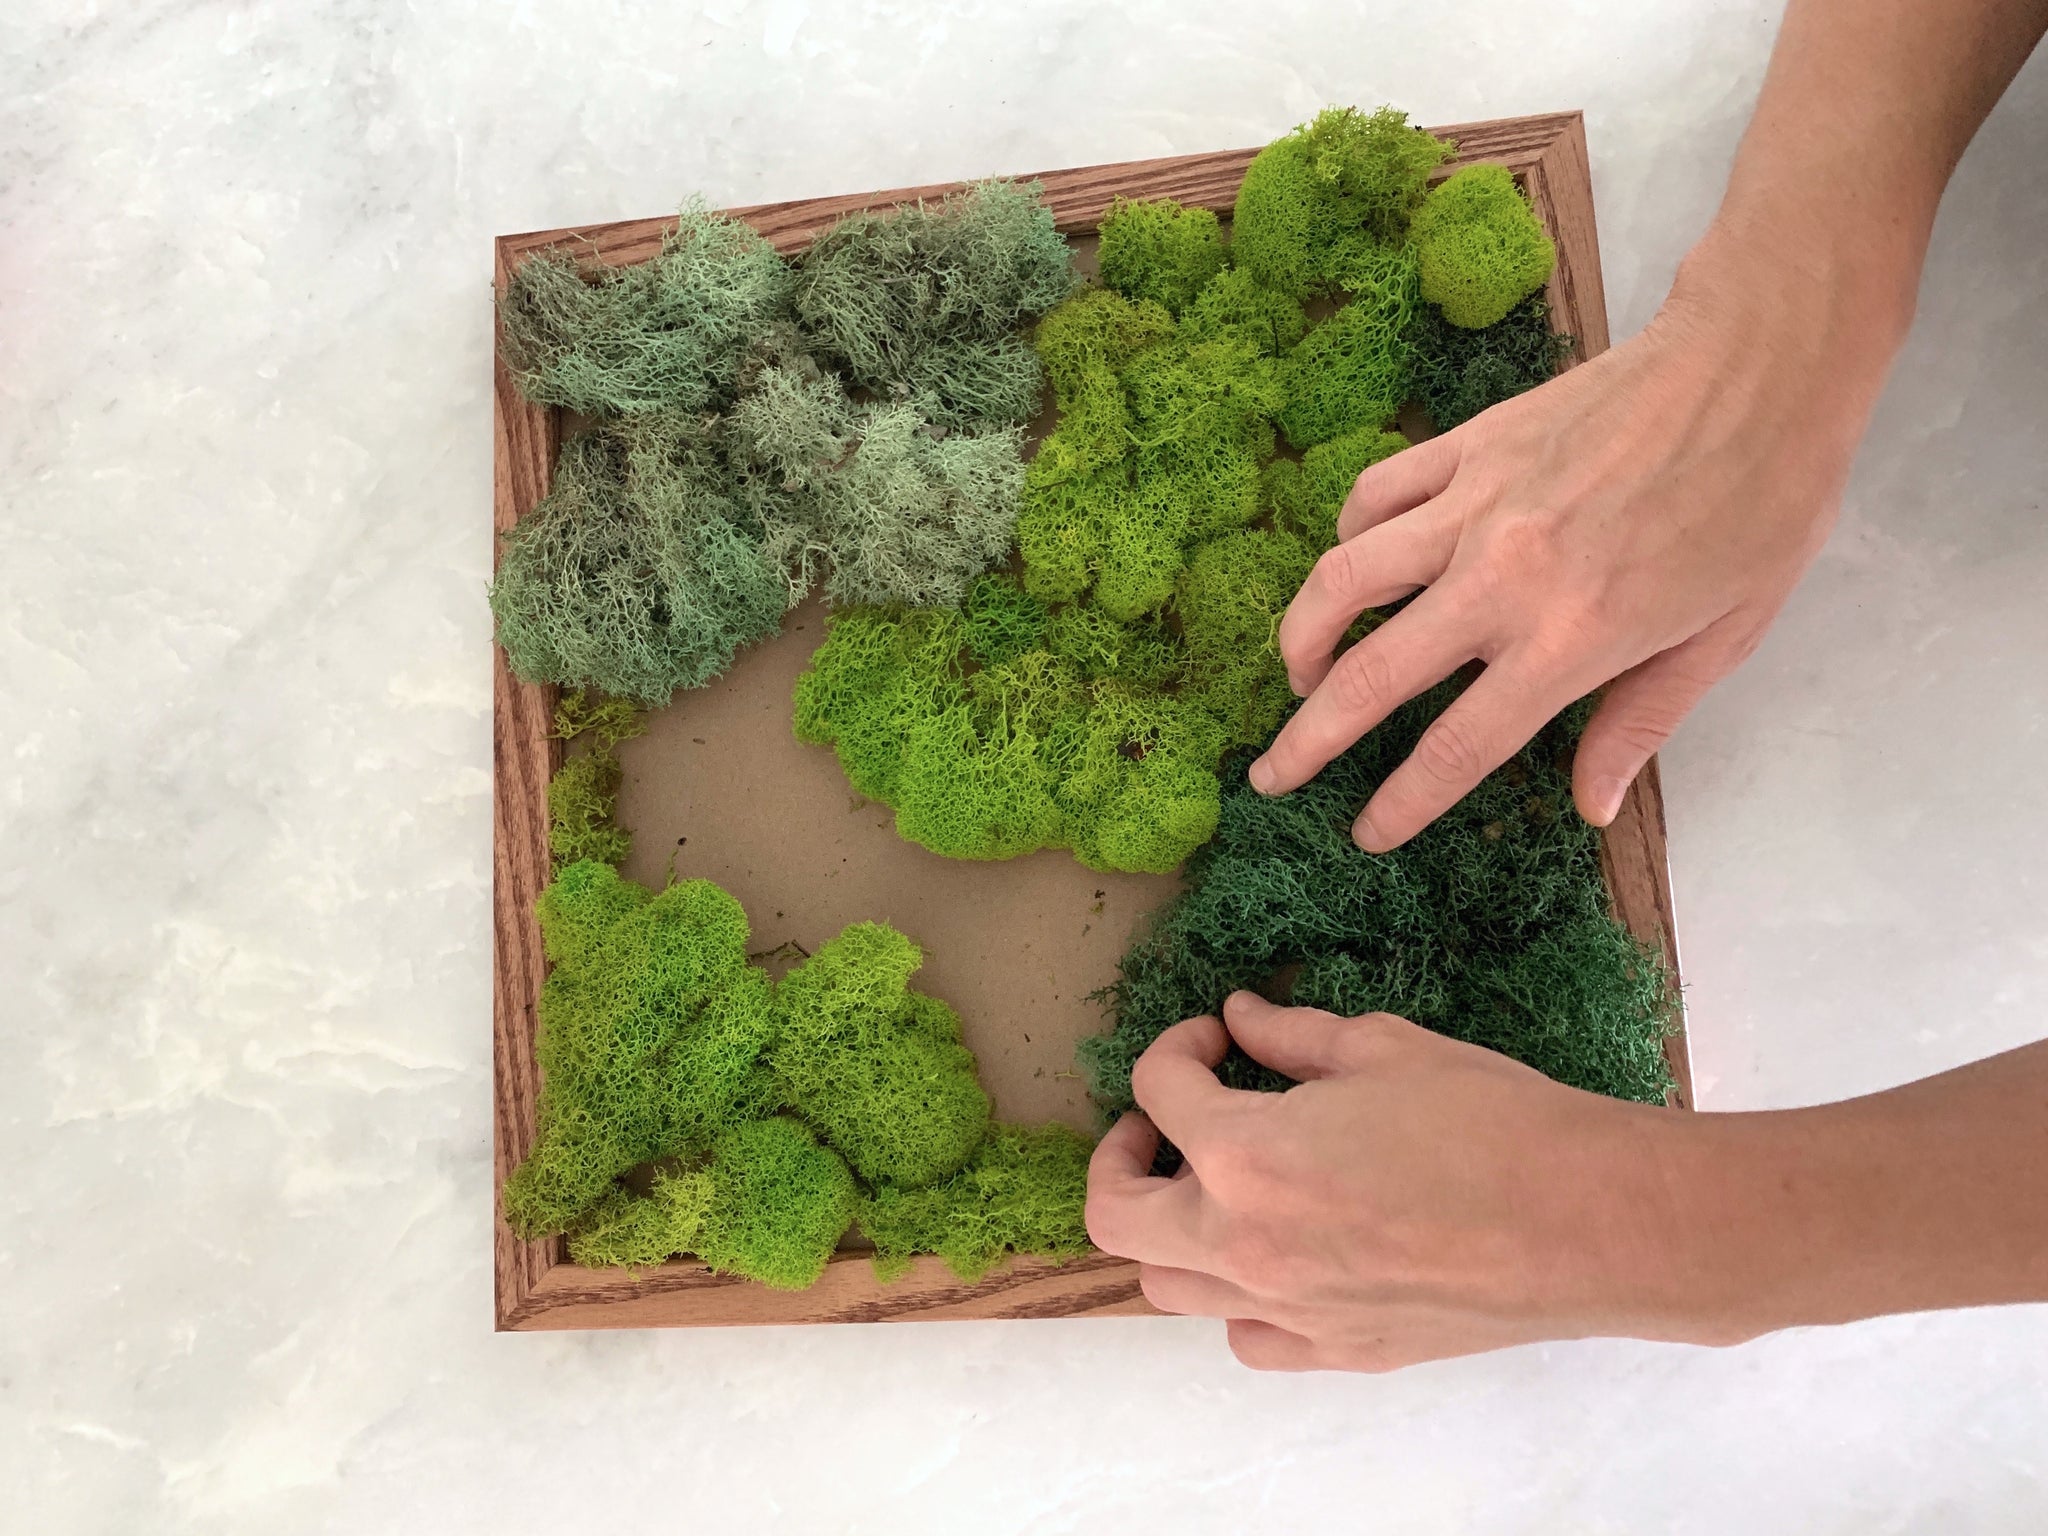 DIY Moss Wall Art Frame Kit – NaturelyBox